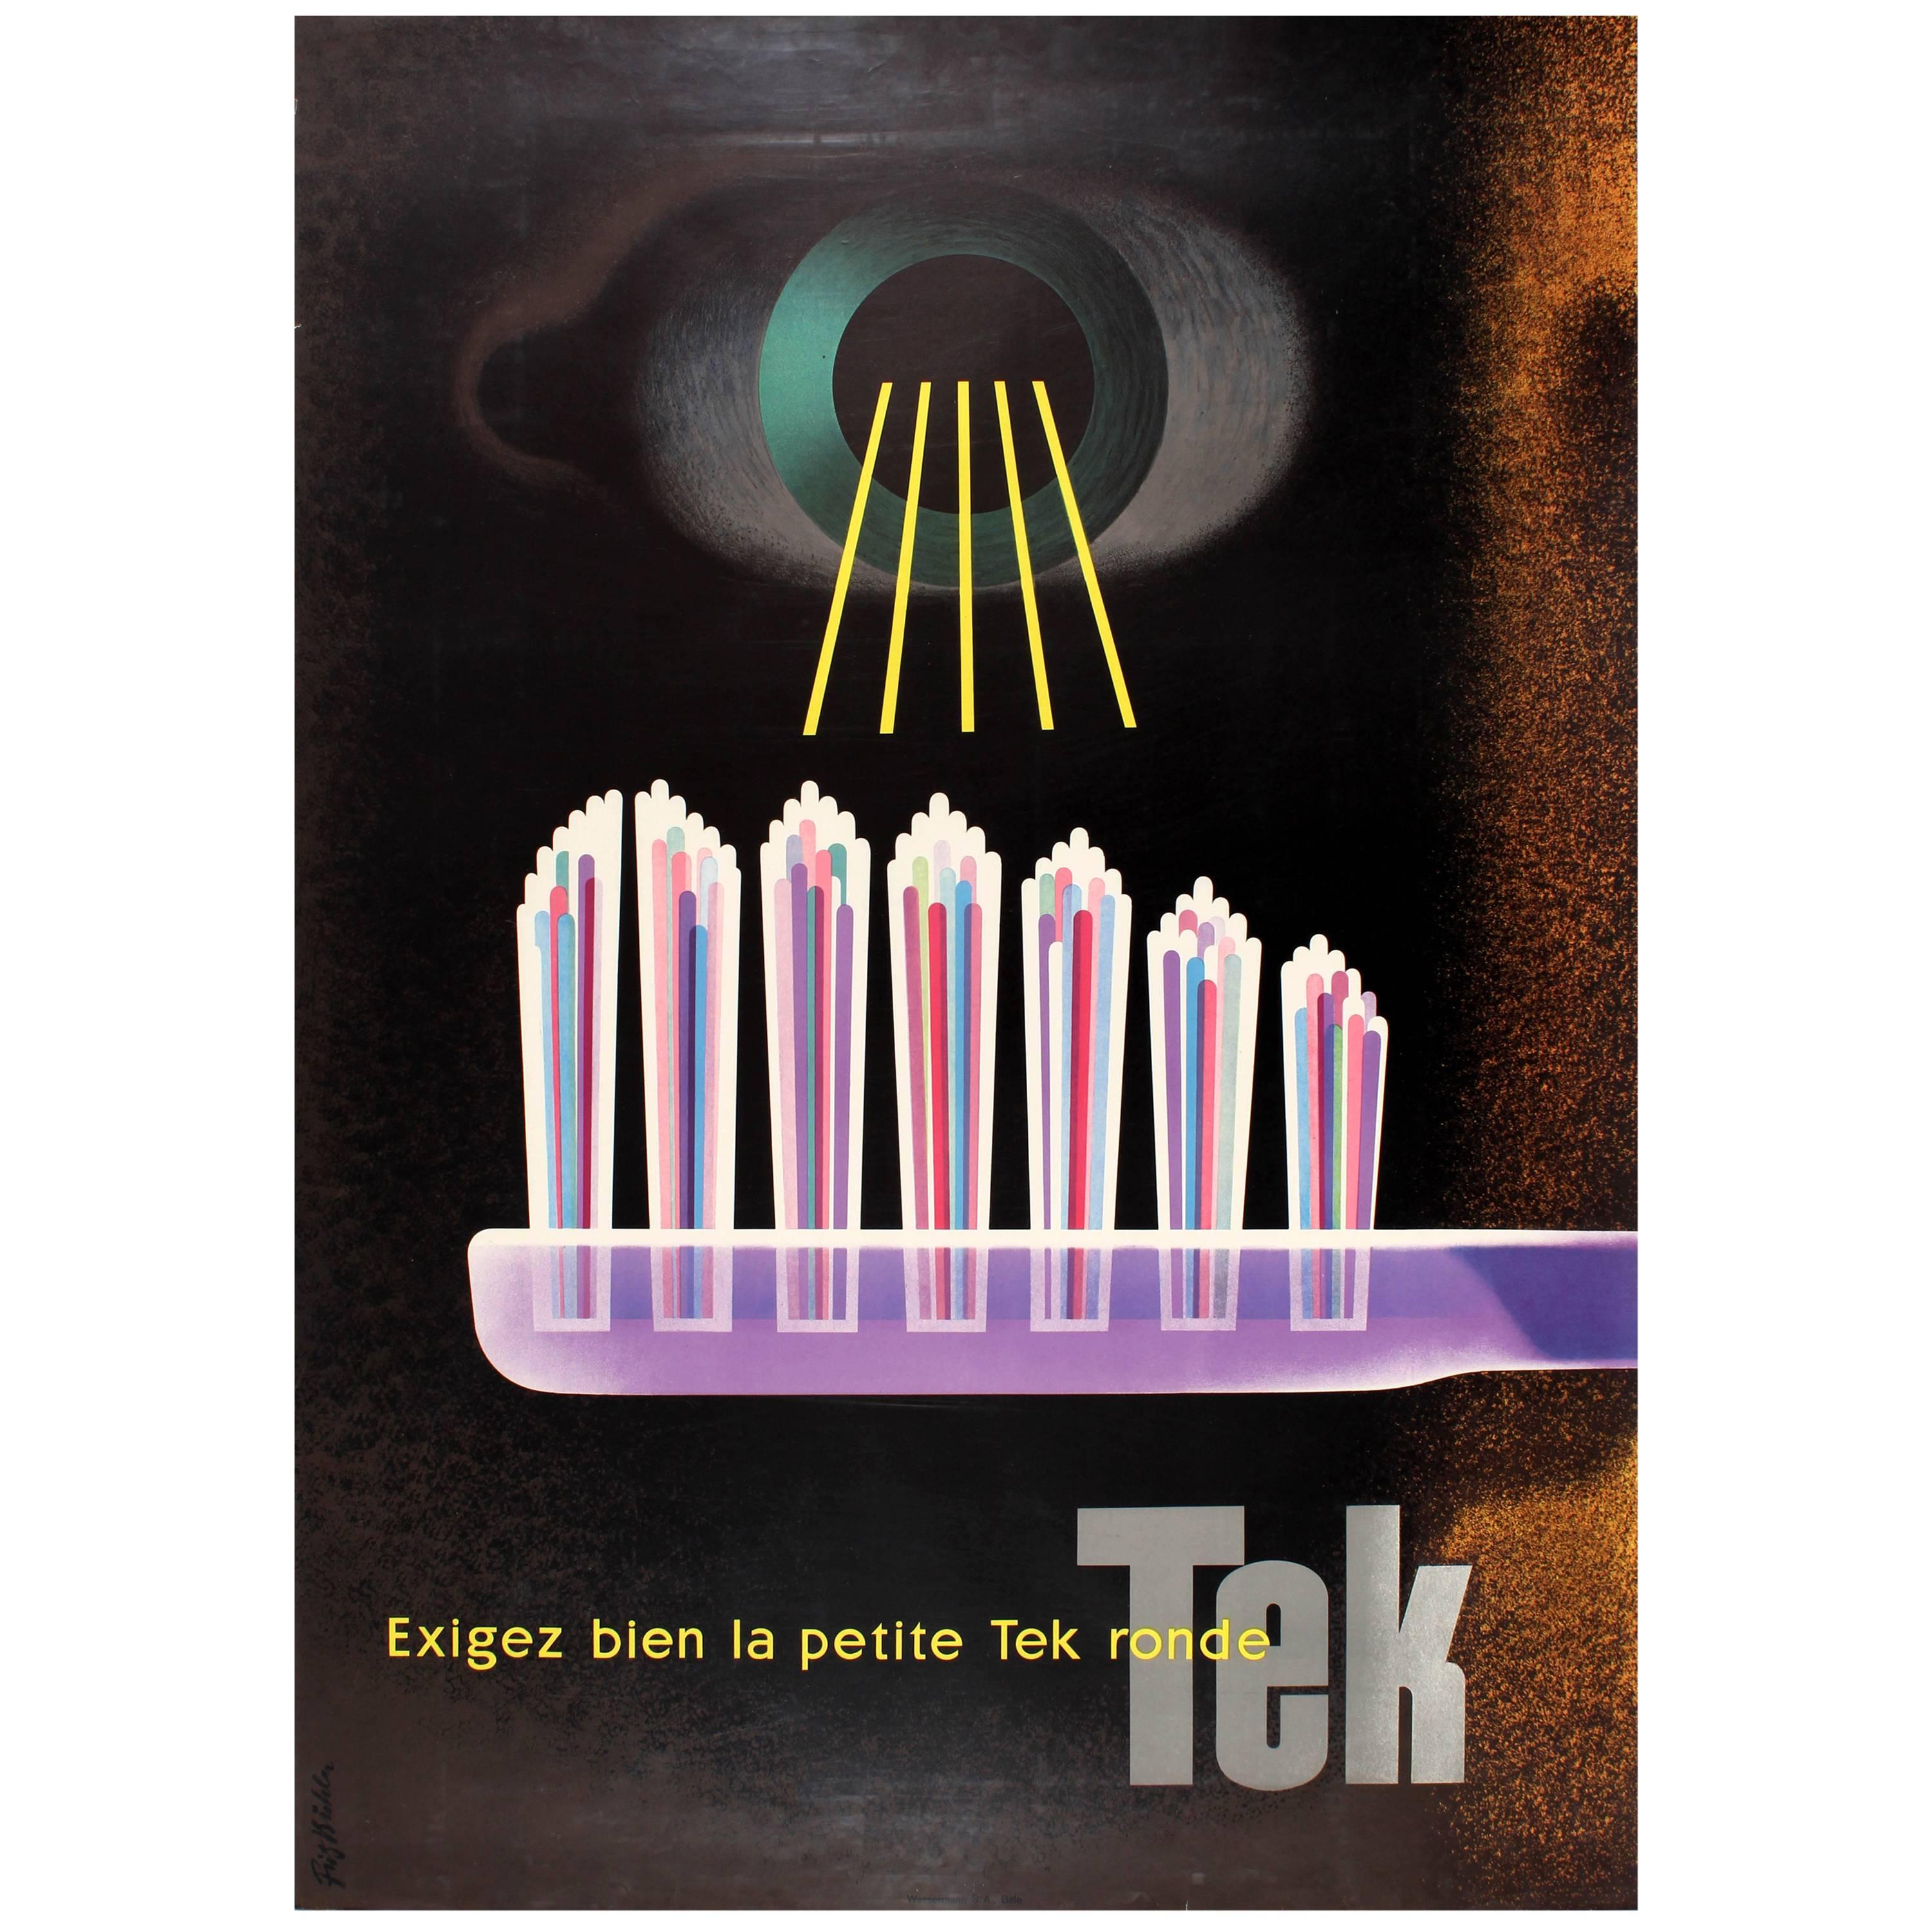 Original Vintage Mid-Century Modern Design Advertising Poster for Tek Toothbrush